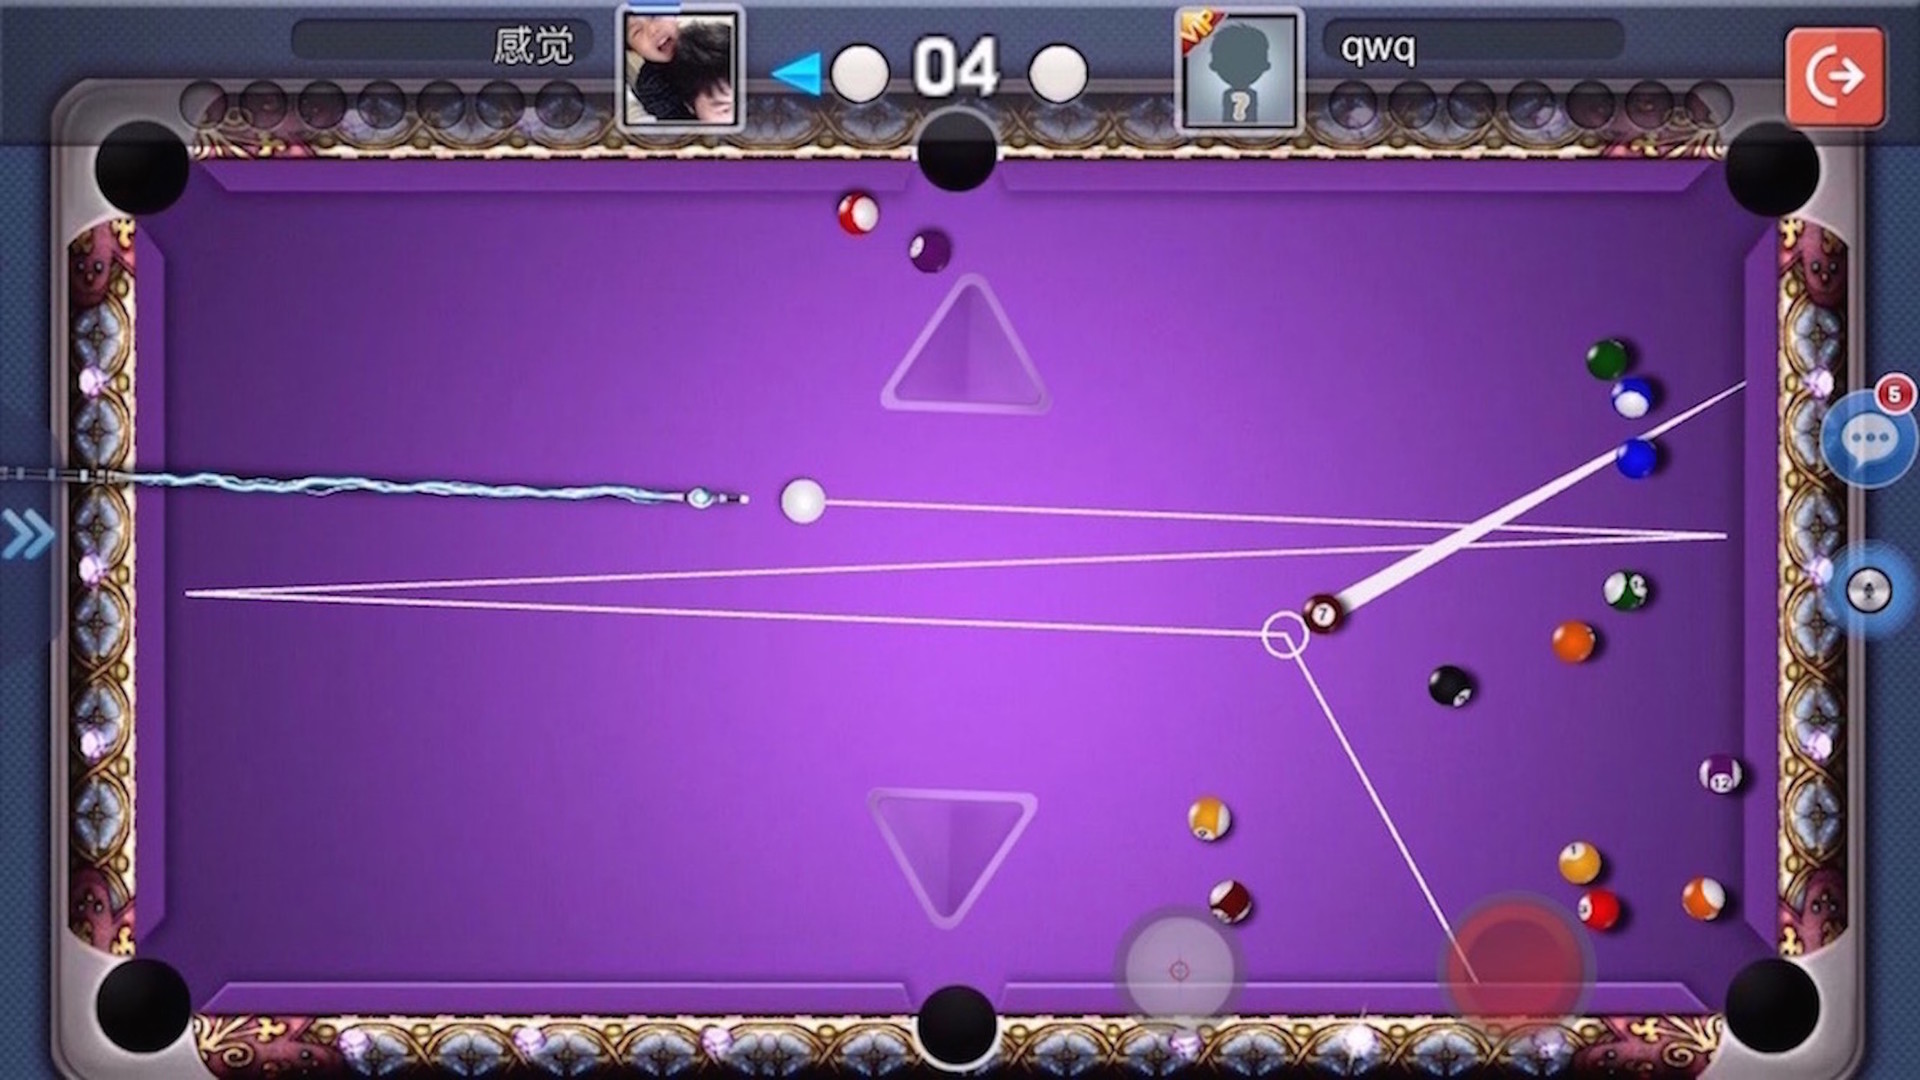 SNOK-Best online multiplayer snooker game! for Mac - Download